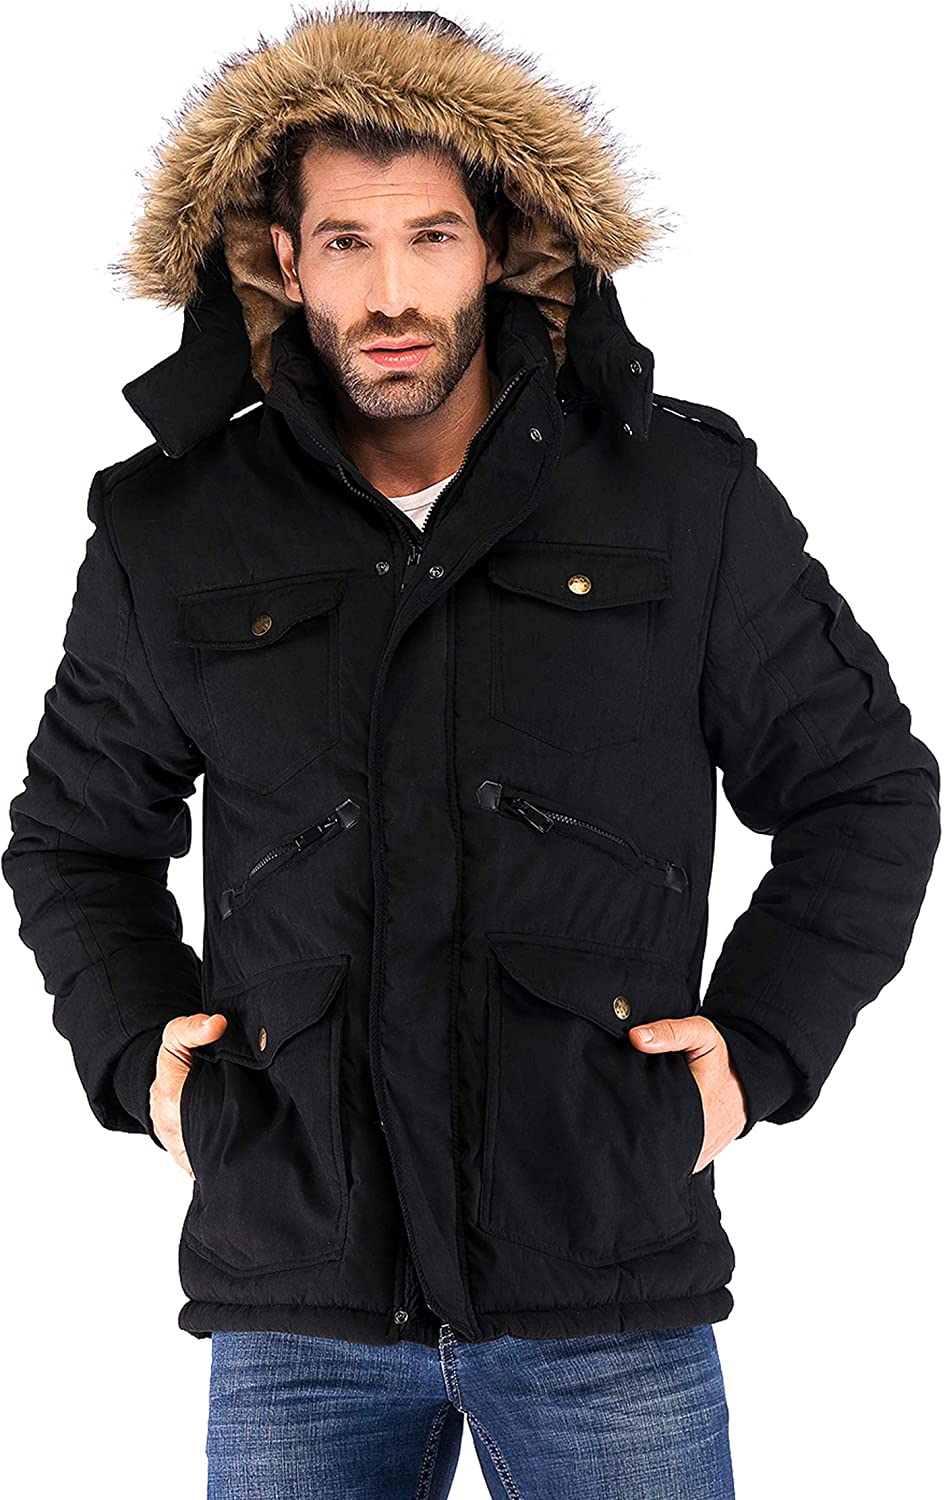 Yozai Mens Winter Military Warm Jacket Fleece Coat with Detachable Fur Hood Outwear